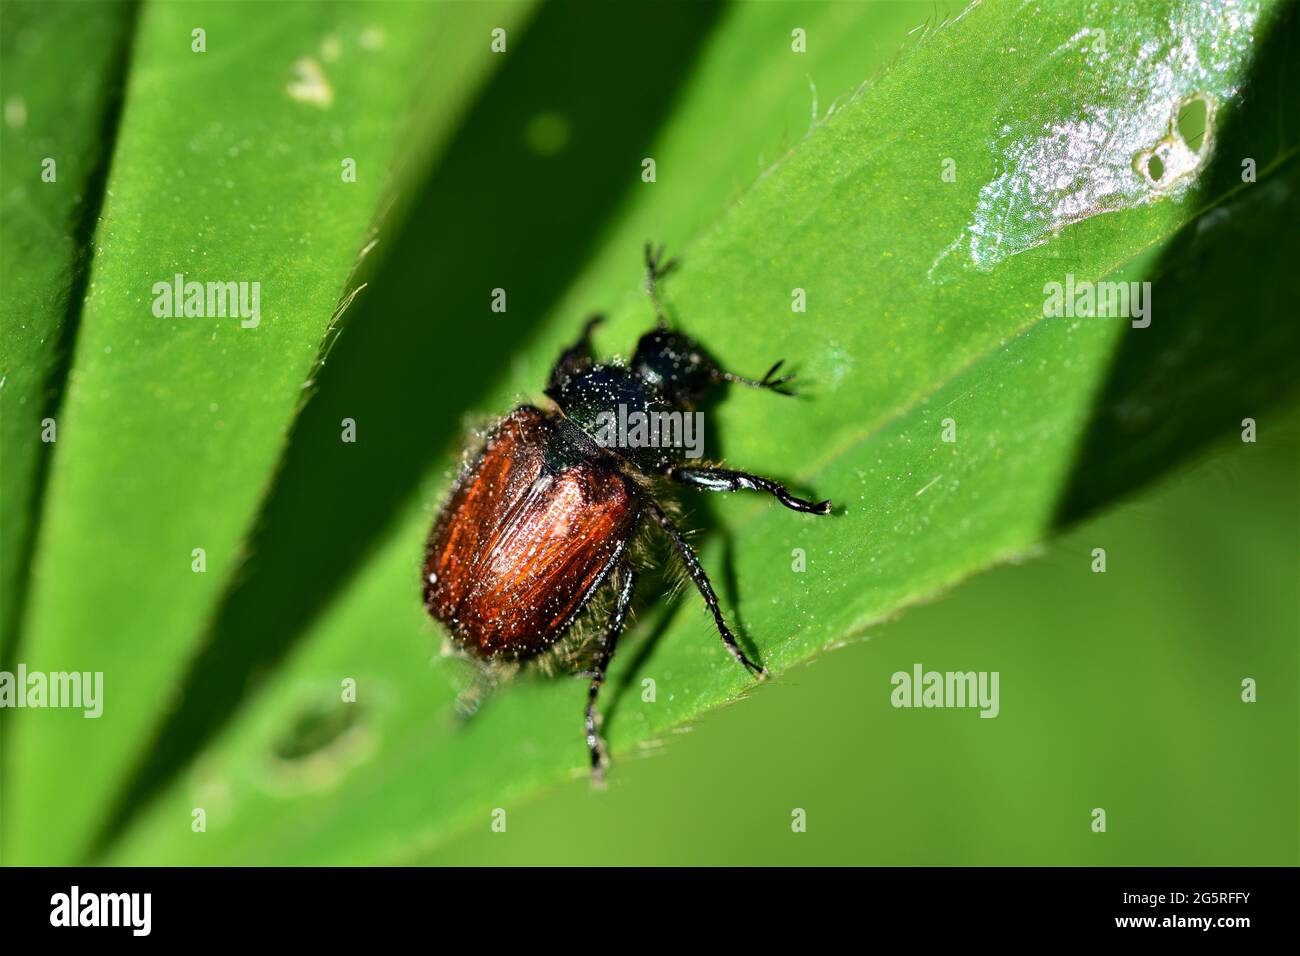 Garden foliage beetle - Phyllopertha horticola on a green leave Stock Photo